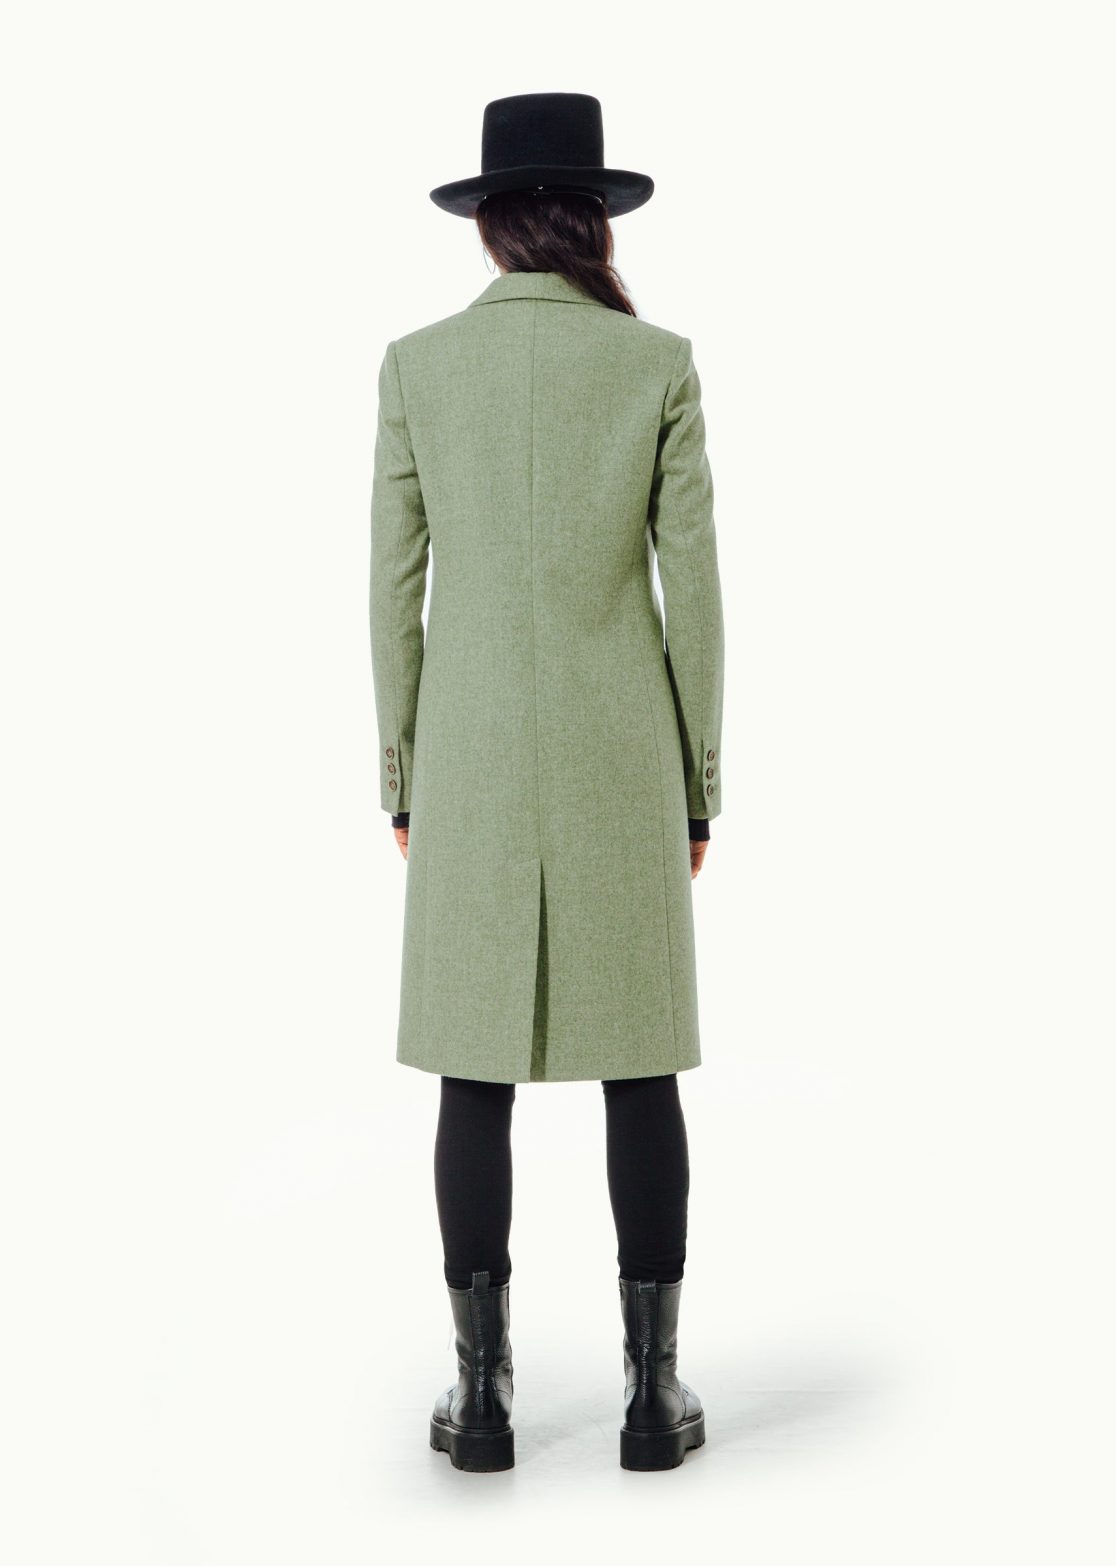 Women - Suit Jackets - Coats - Wald Suit Jacket Green Sage Image Secondary